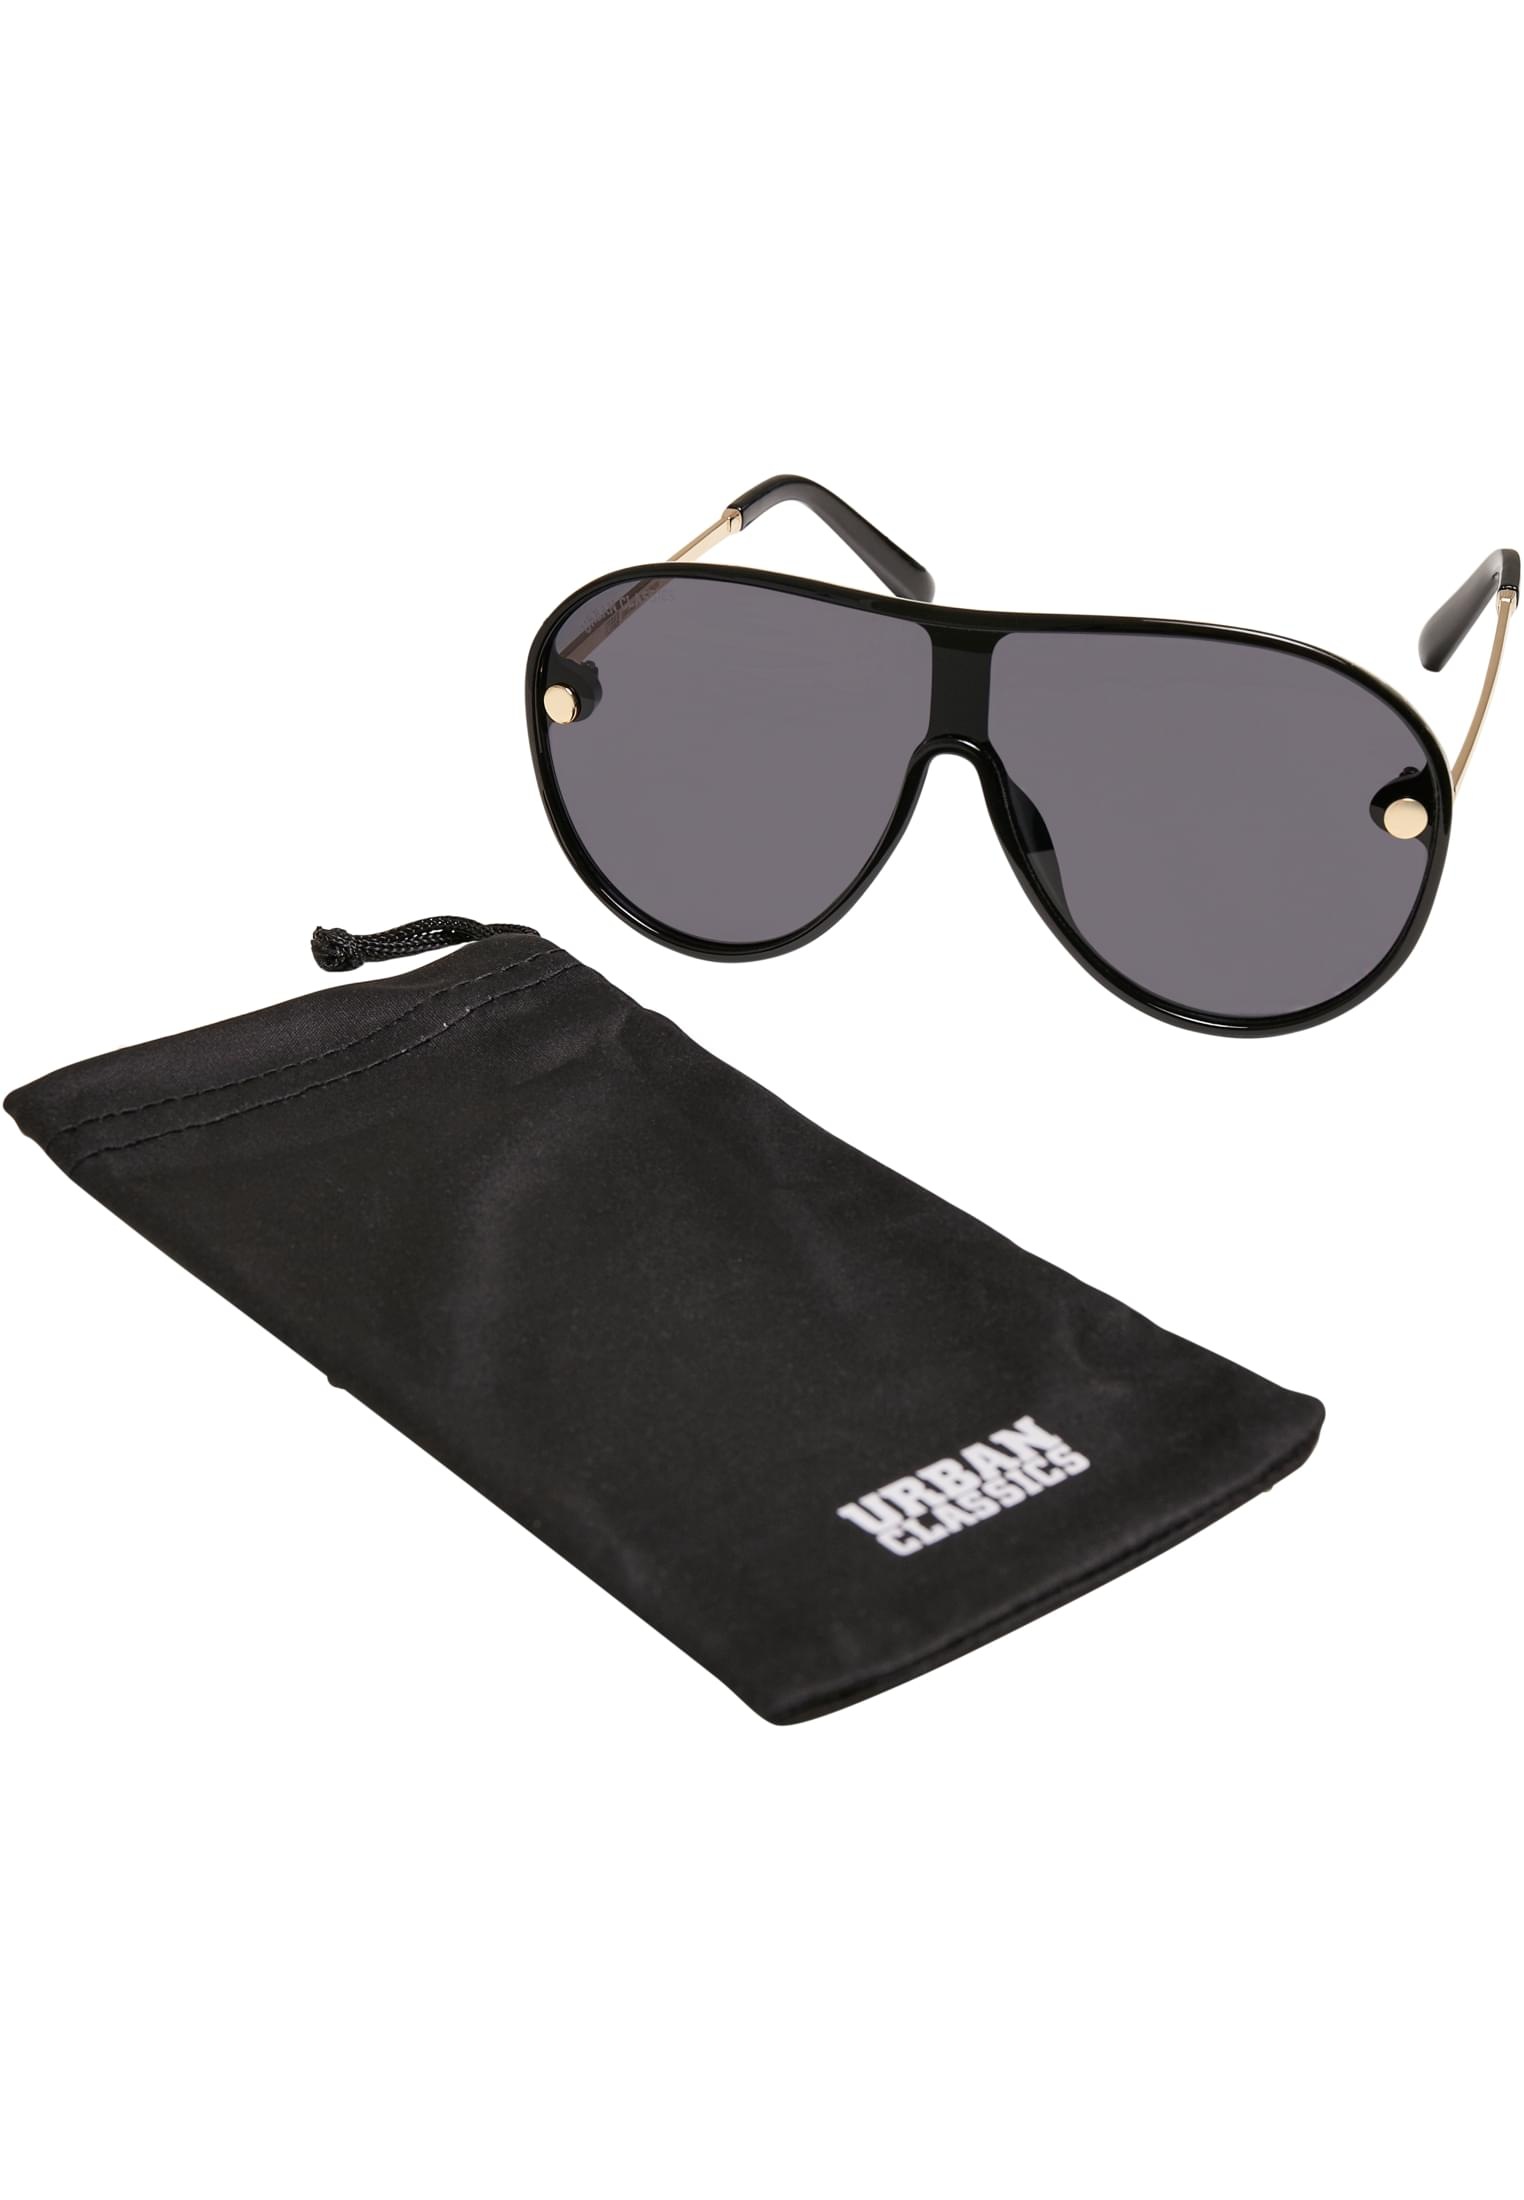 URBAN Sunglasses online »Unisex walking I\'m kaufen Sonnenbrille | CLASSICS Naxos«